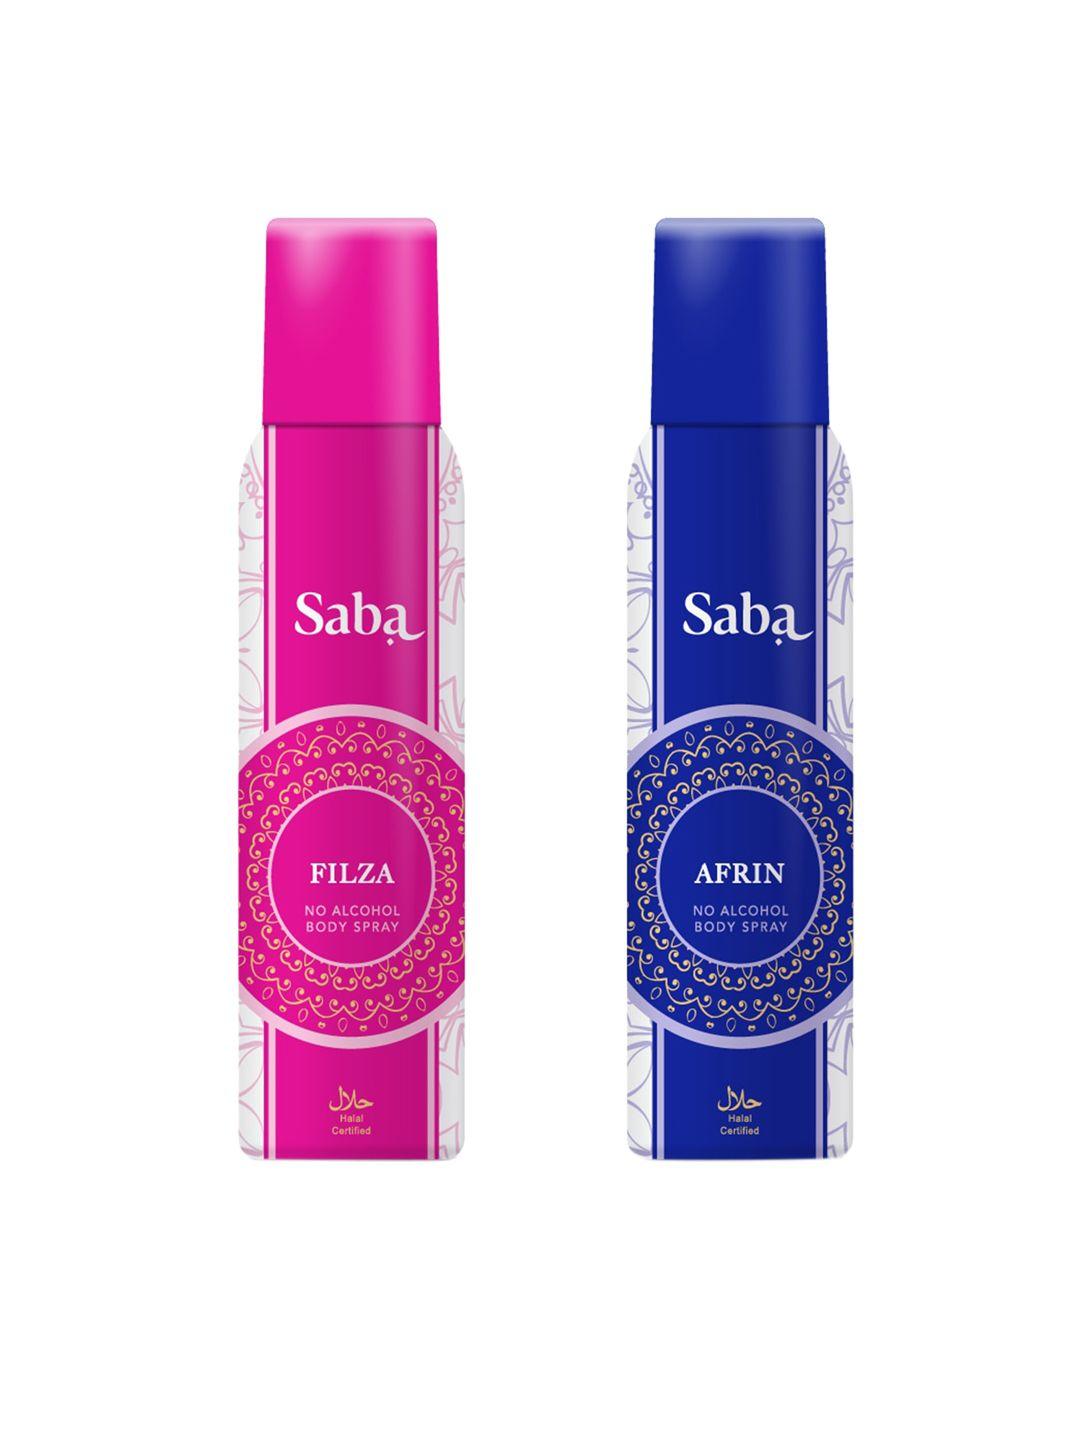 saba women set of filza + afrin no alcohol body spray - 150 ml each